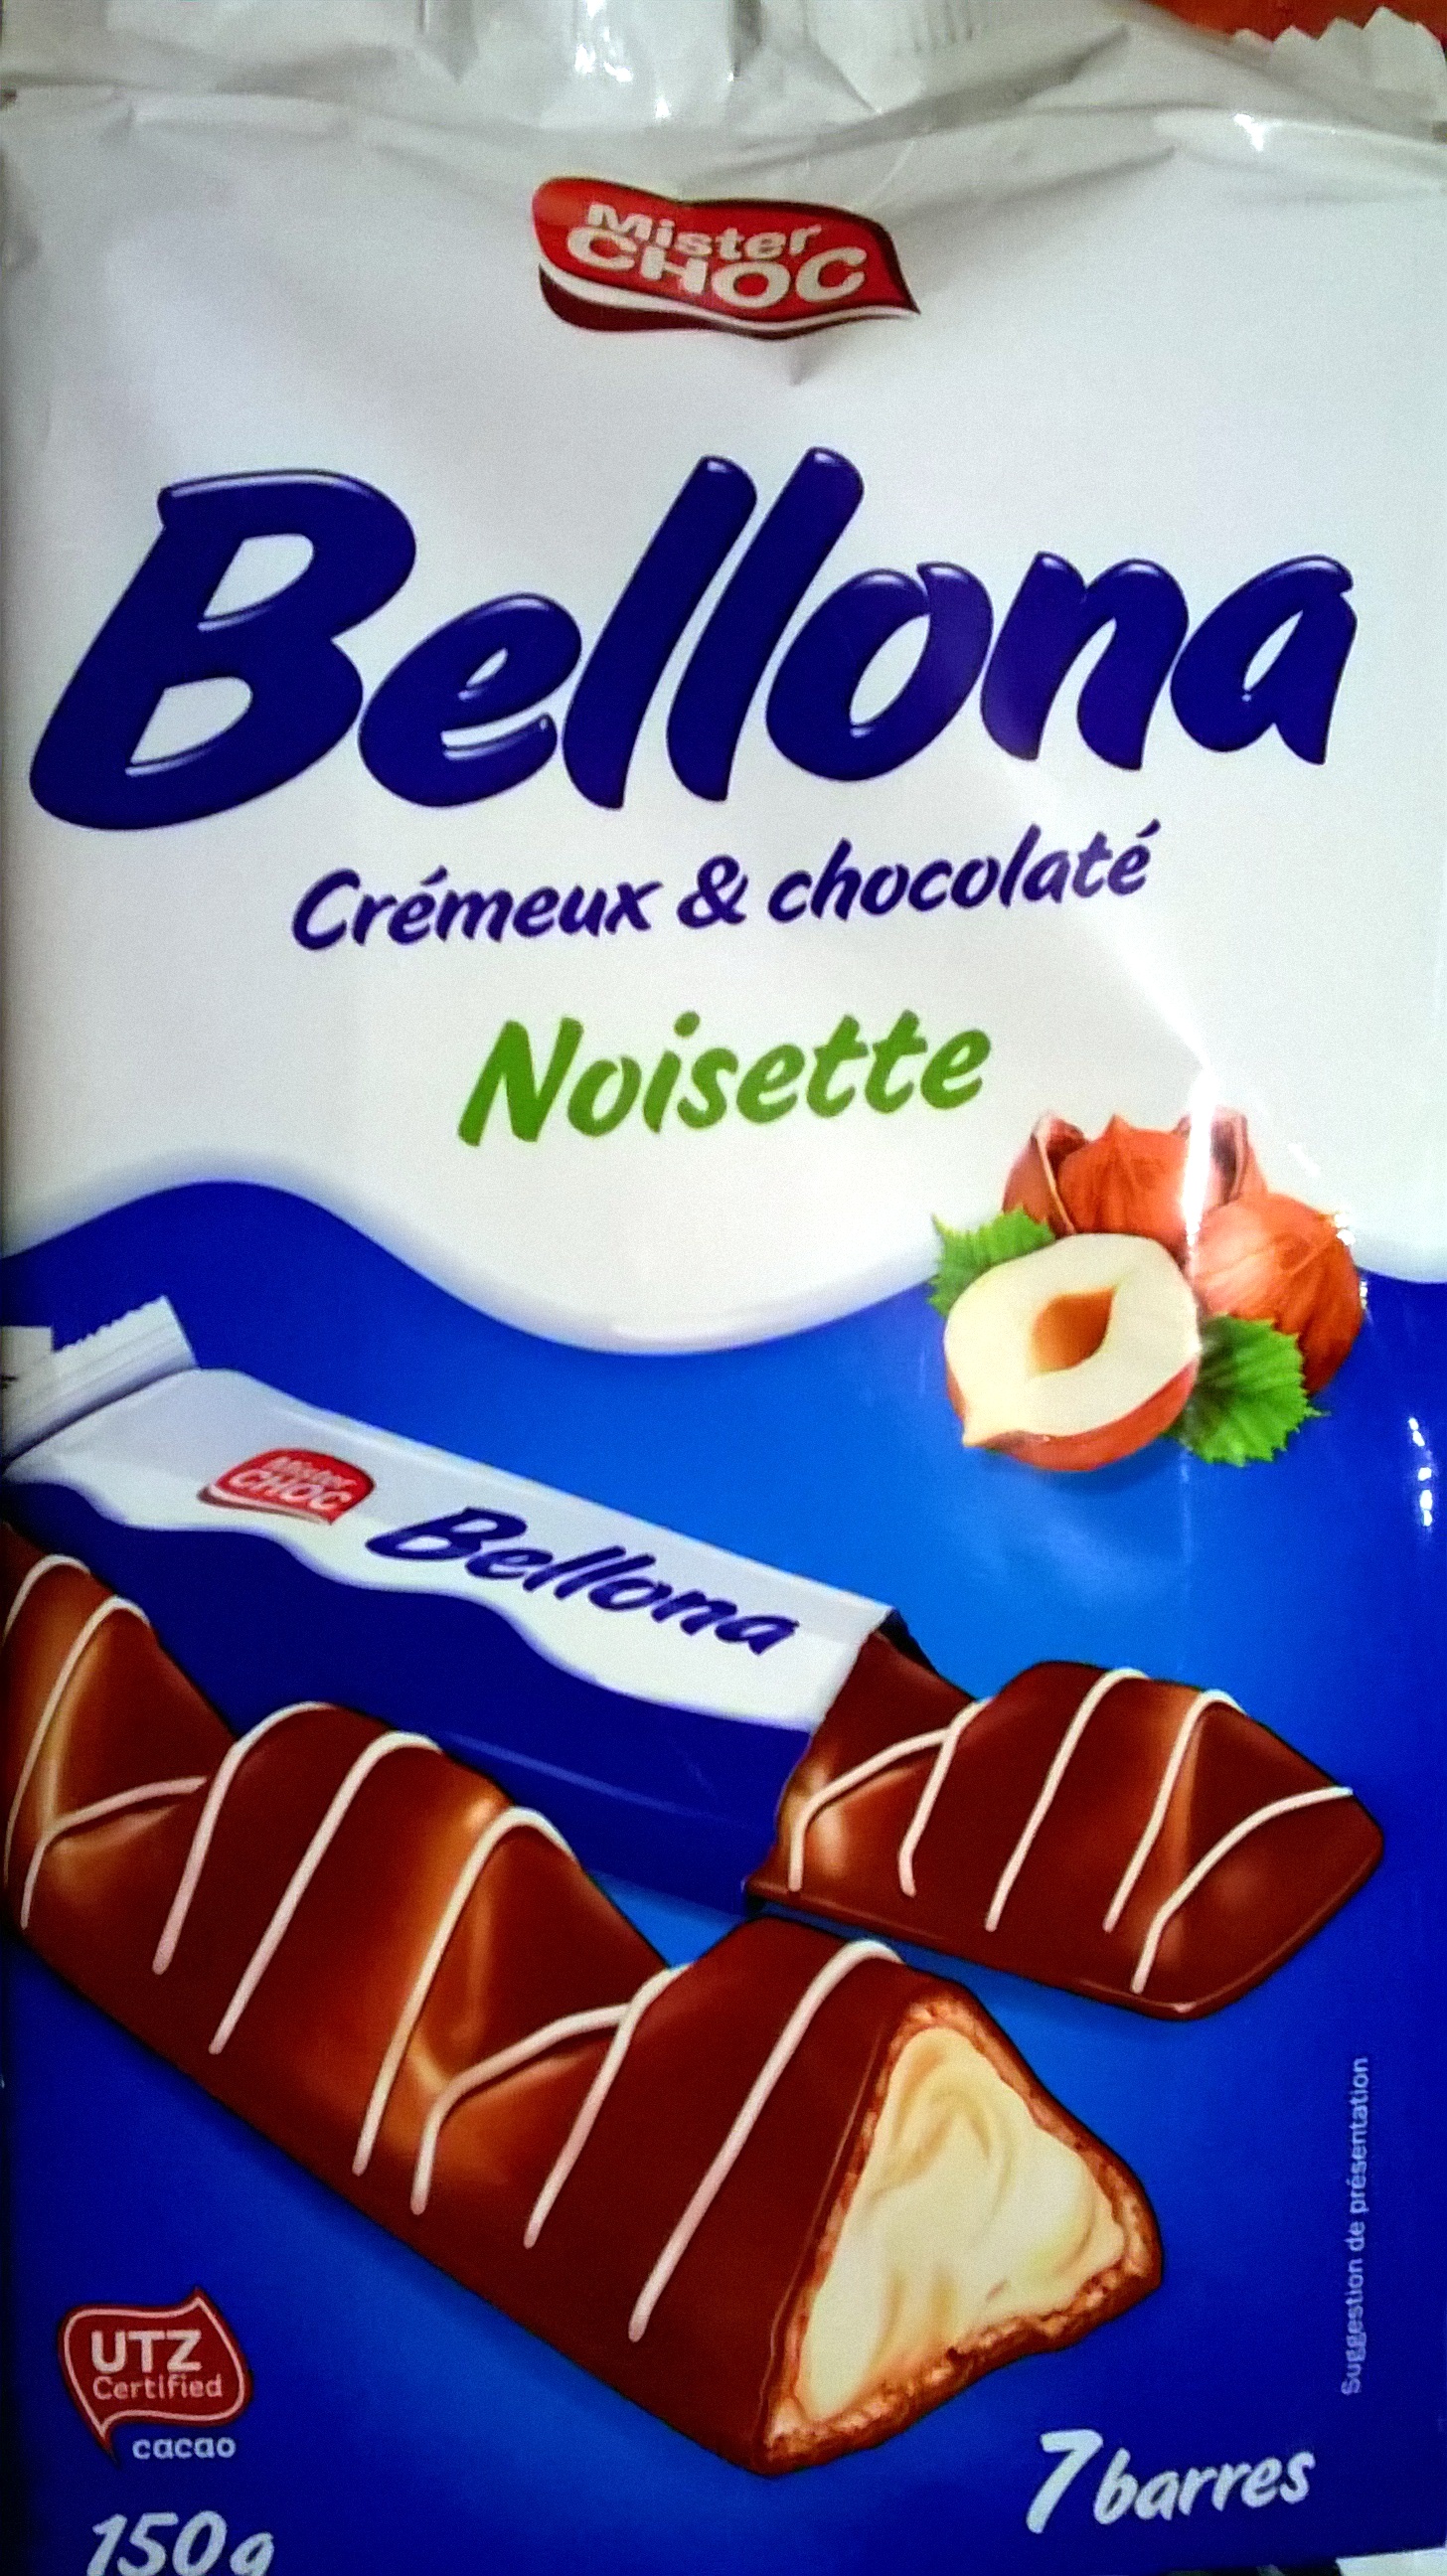 Bellona Haselnuss - Product